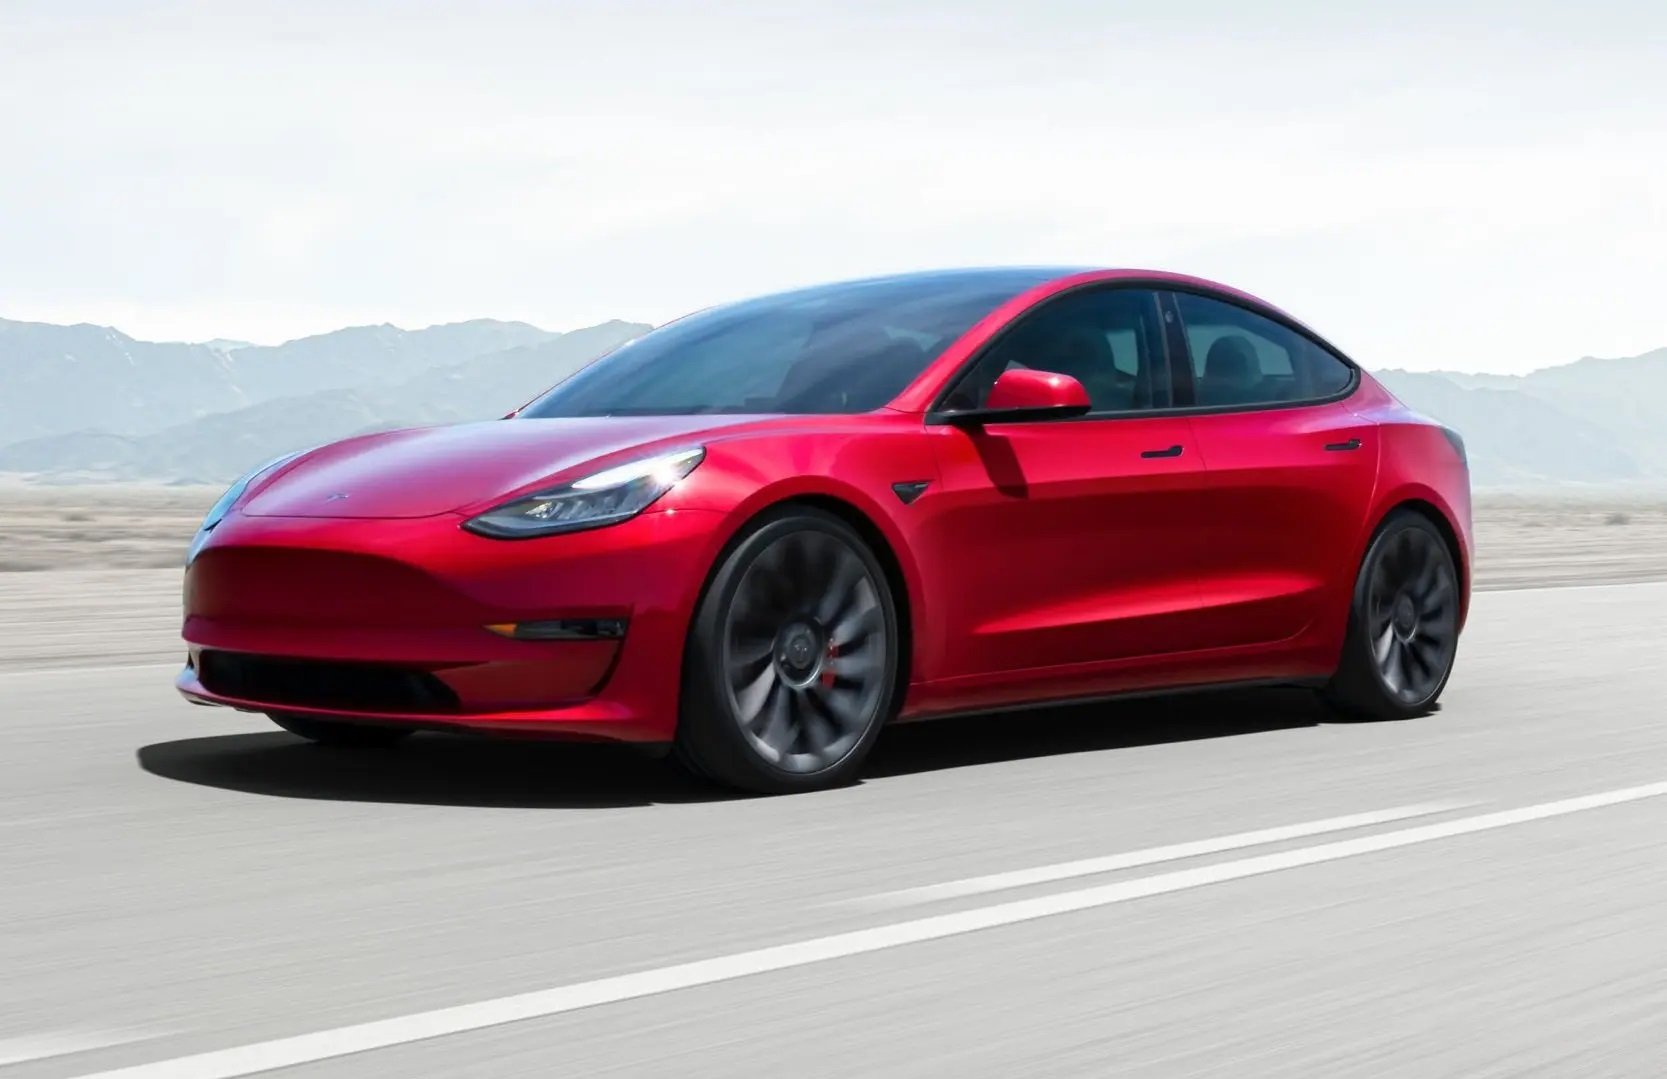 Tesla Model 3 Price Drop